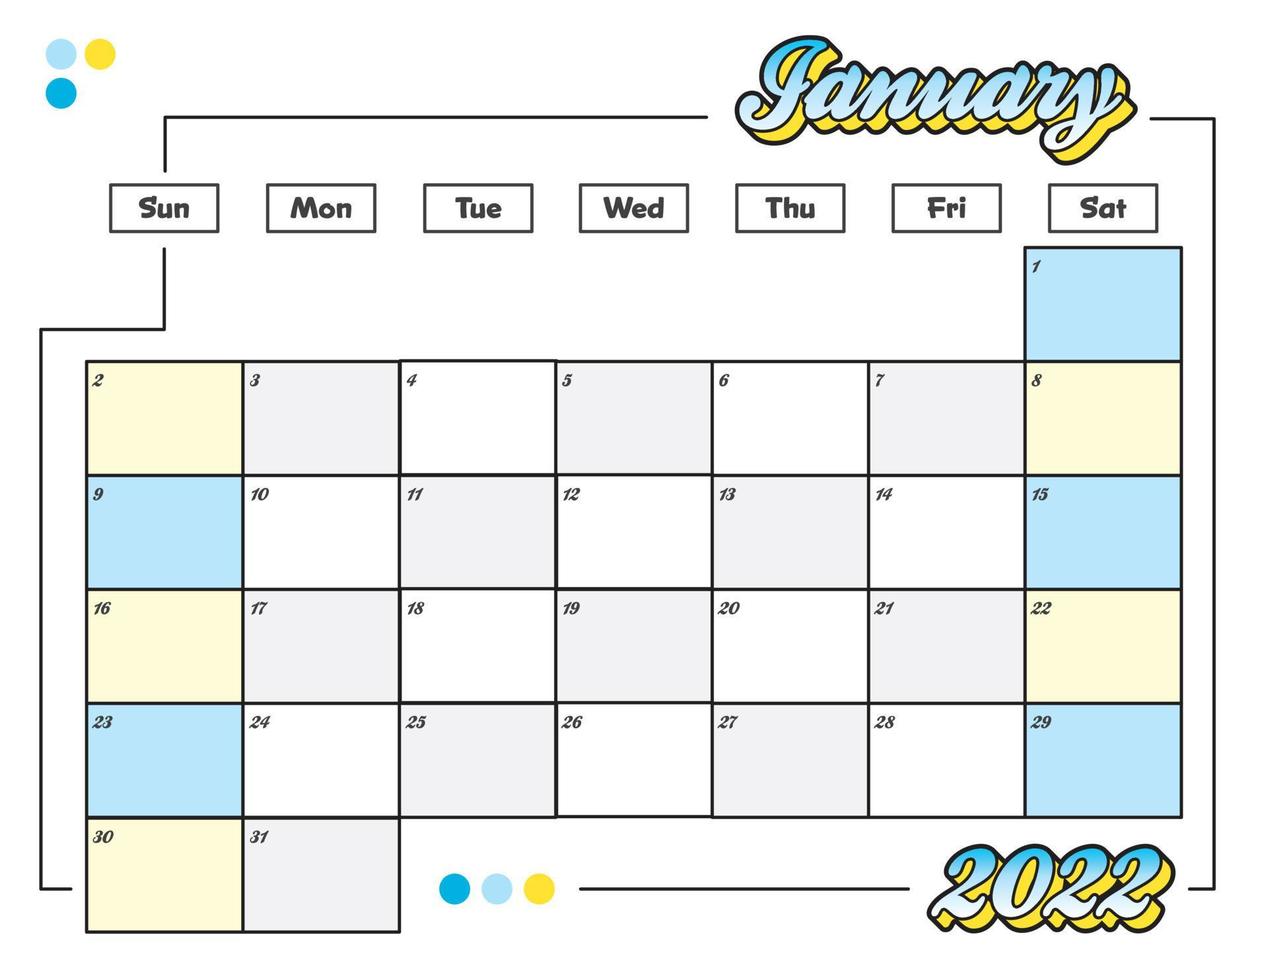 Calendar planner 2022